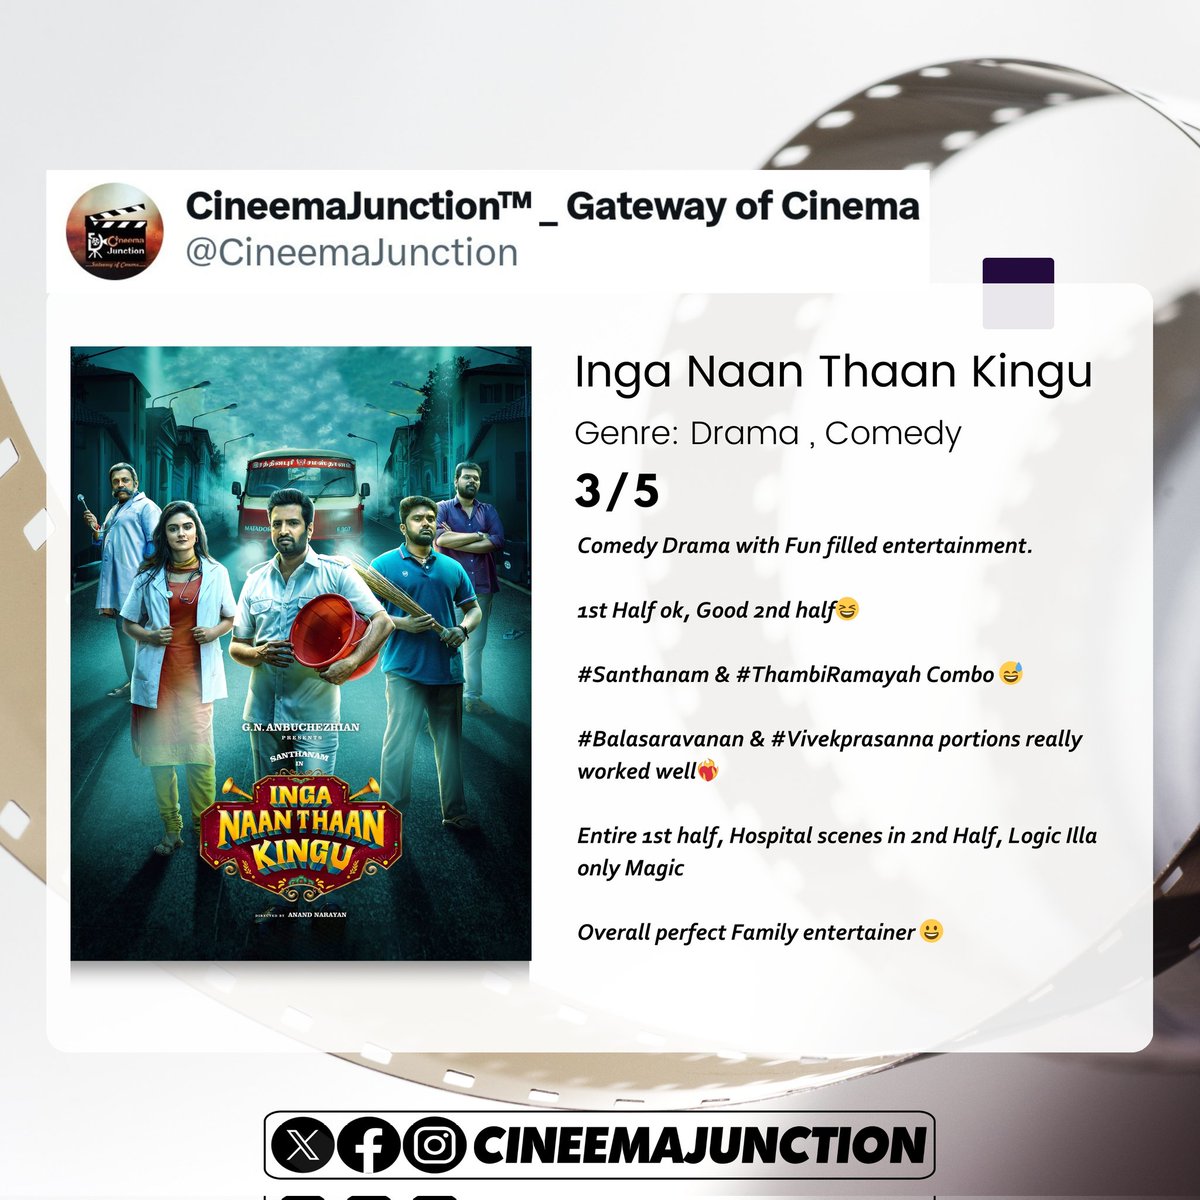 Summer’s Coolest Family Entertainer #IngaNaanThaanKingu Review (3/5) 

#GNAnbuchezhian @Sushmitaanbu @gopuramfilms @iamsanthanam @Priyalaya_ubd @dirnanand @immancomposer @Bala_actor @actorvivekpra #ThambiRamaiah #Munishkanth #CoolSuresh #CineemaJunction @onlynikil